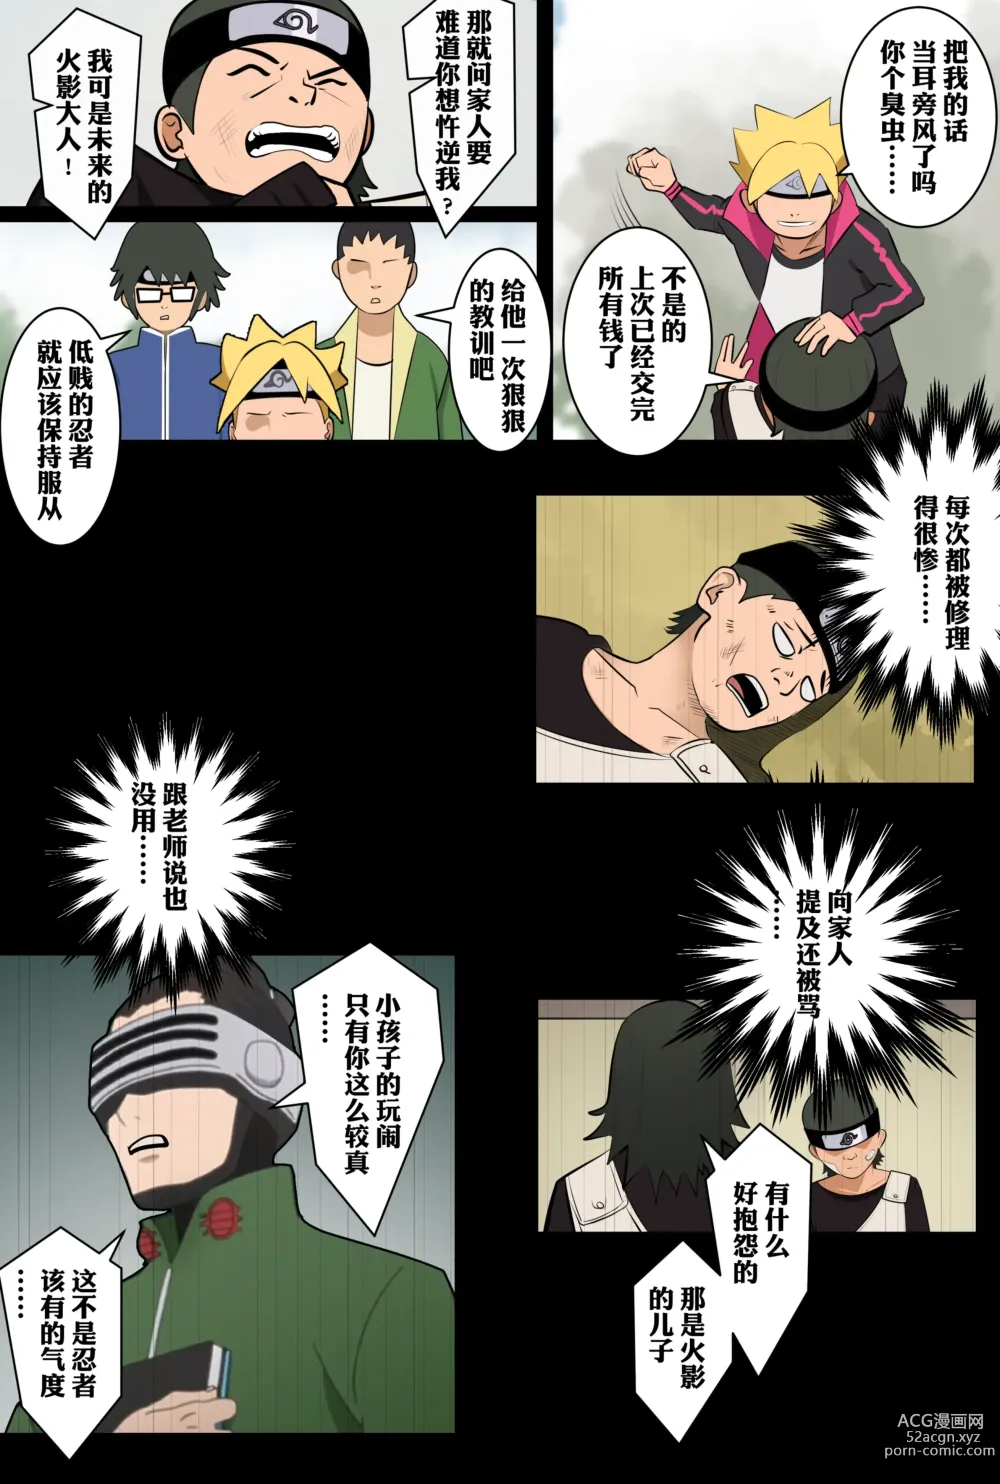 Page 3 of doujinshi 附身忍者的复仇